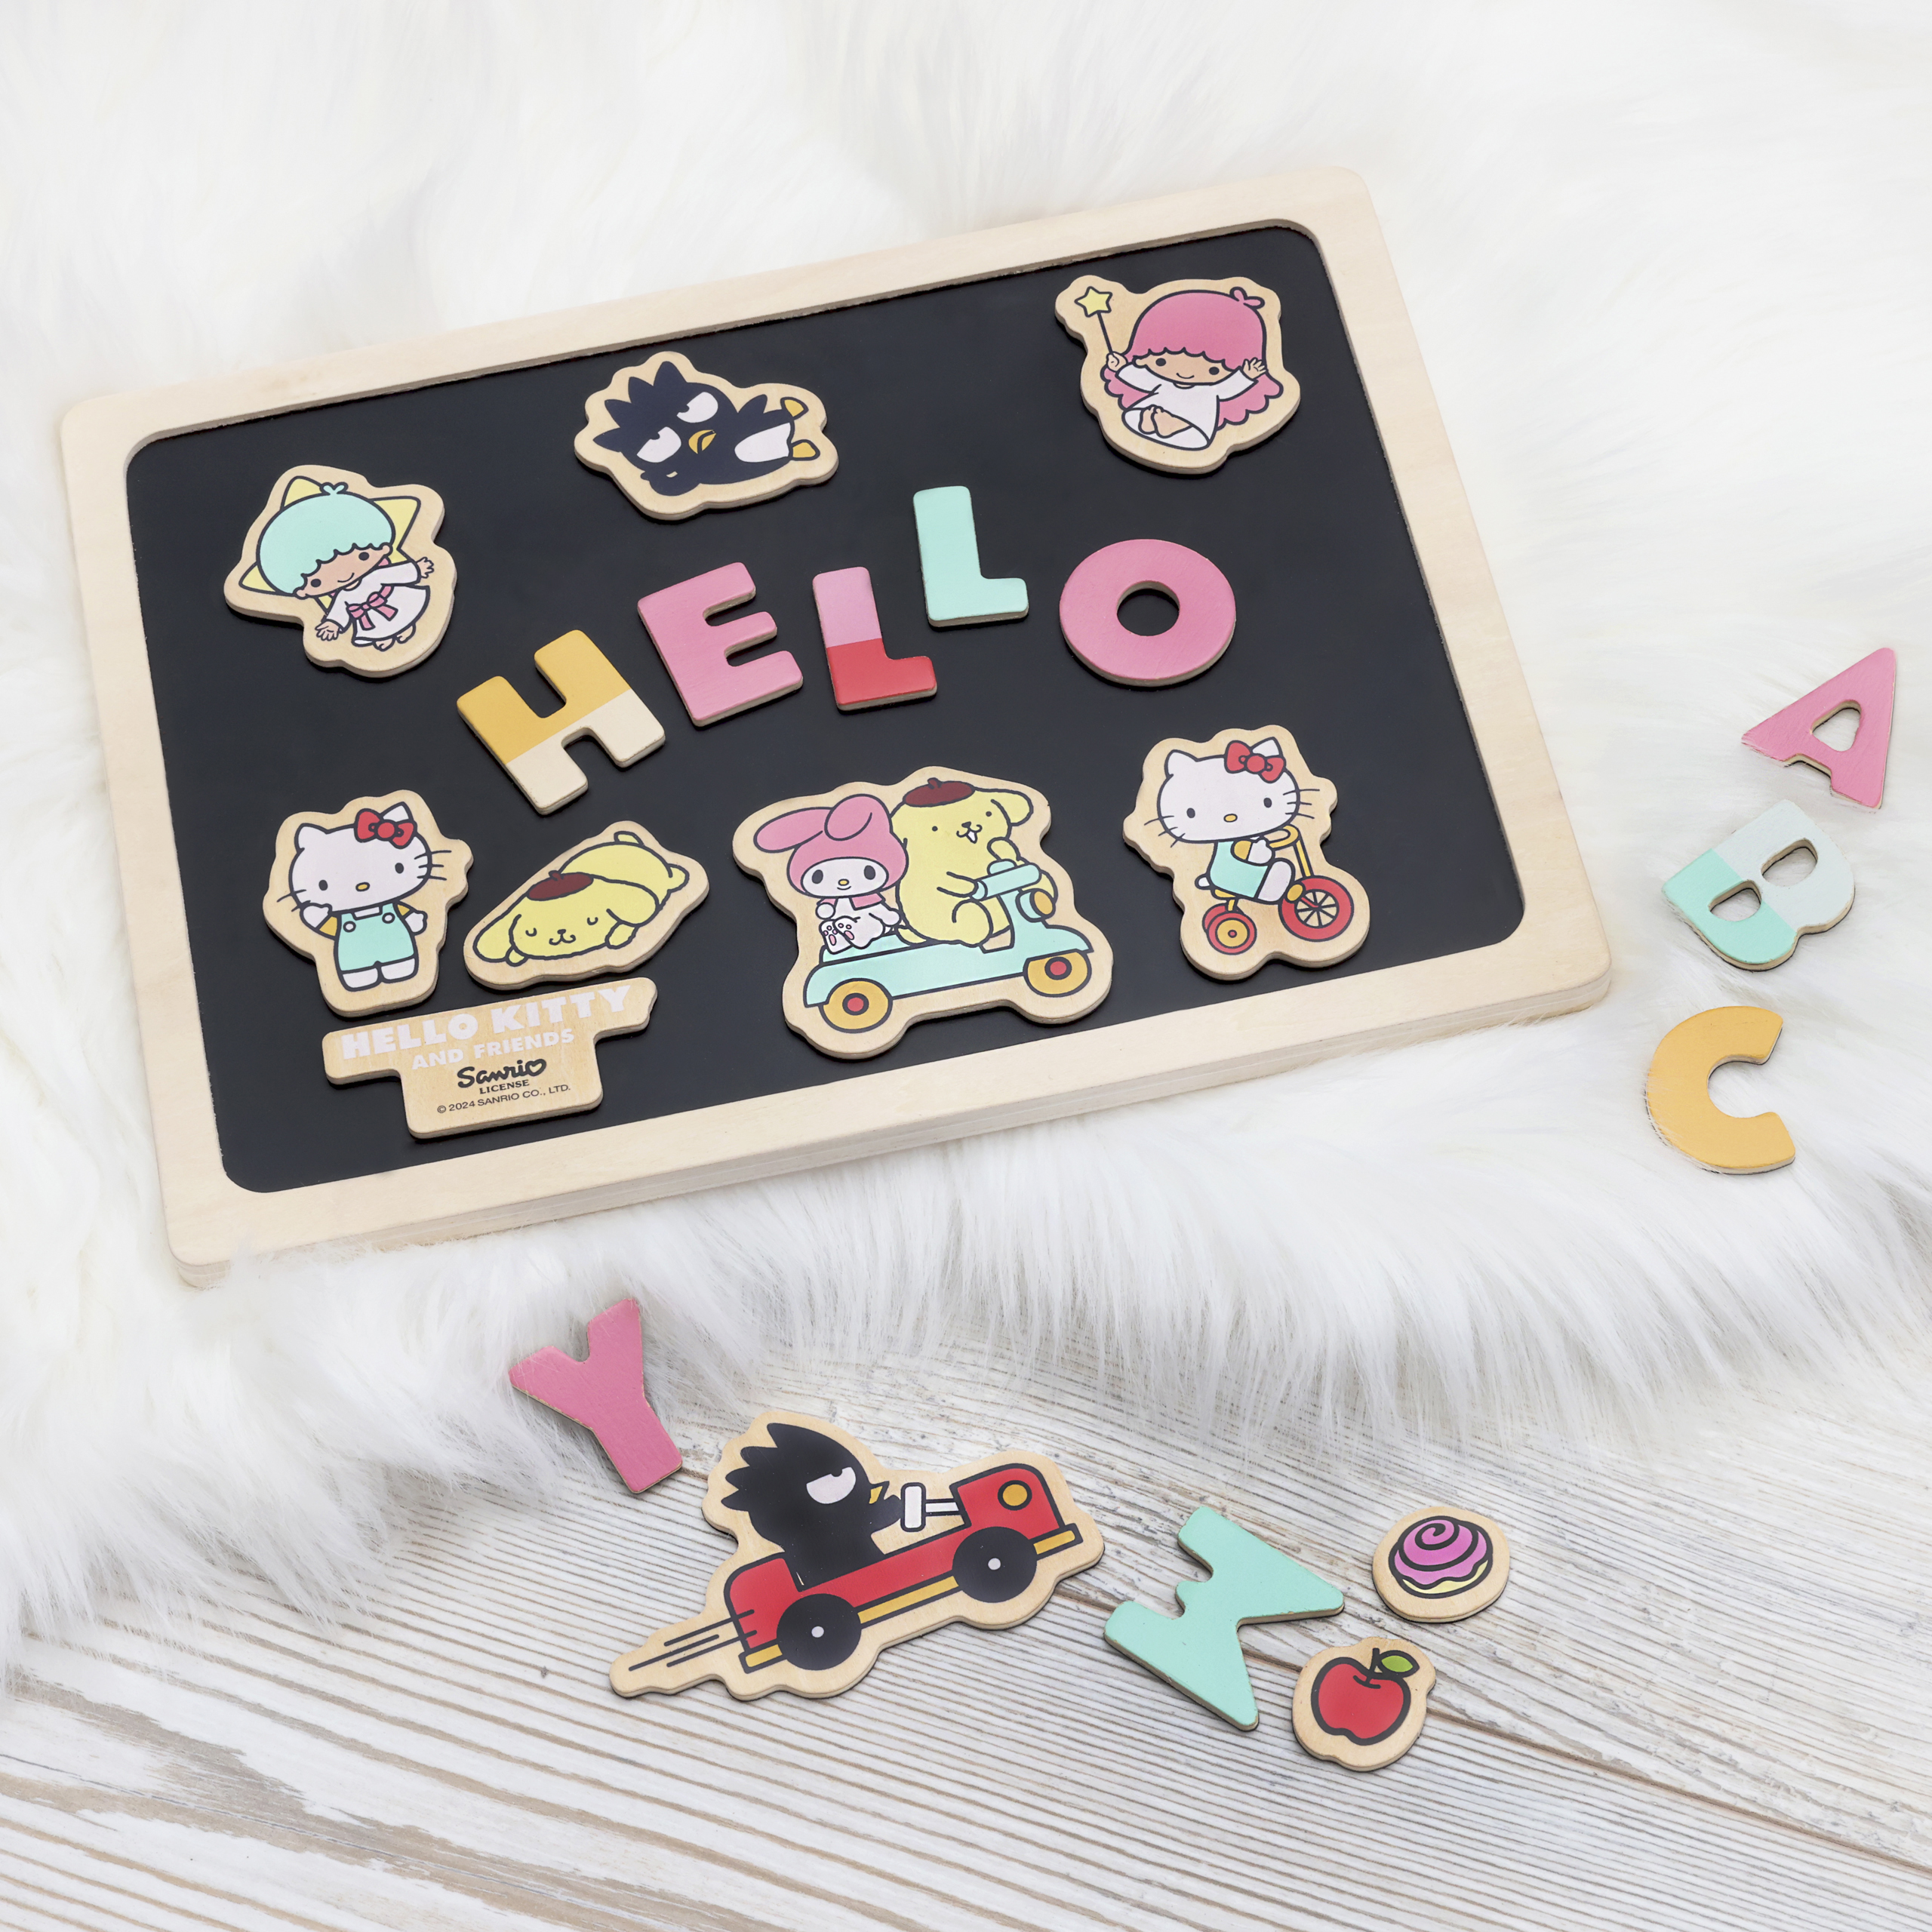 Hello Kitty and Friends hello kitty magnetbokstäver och figurer